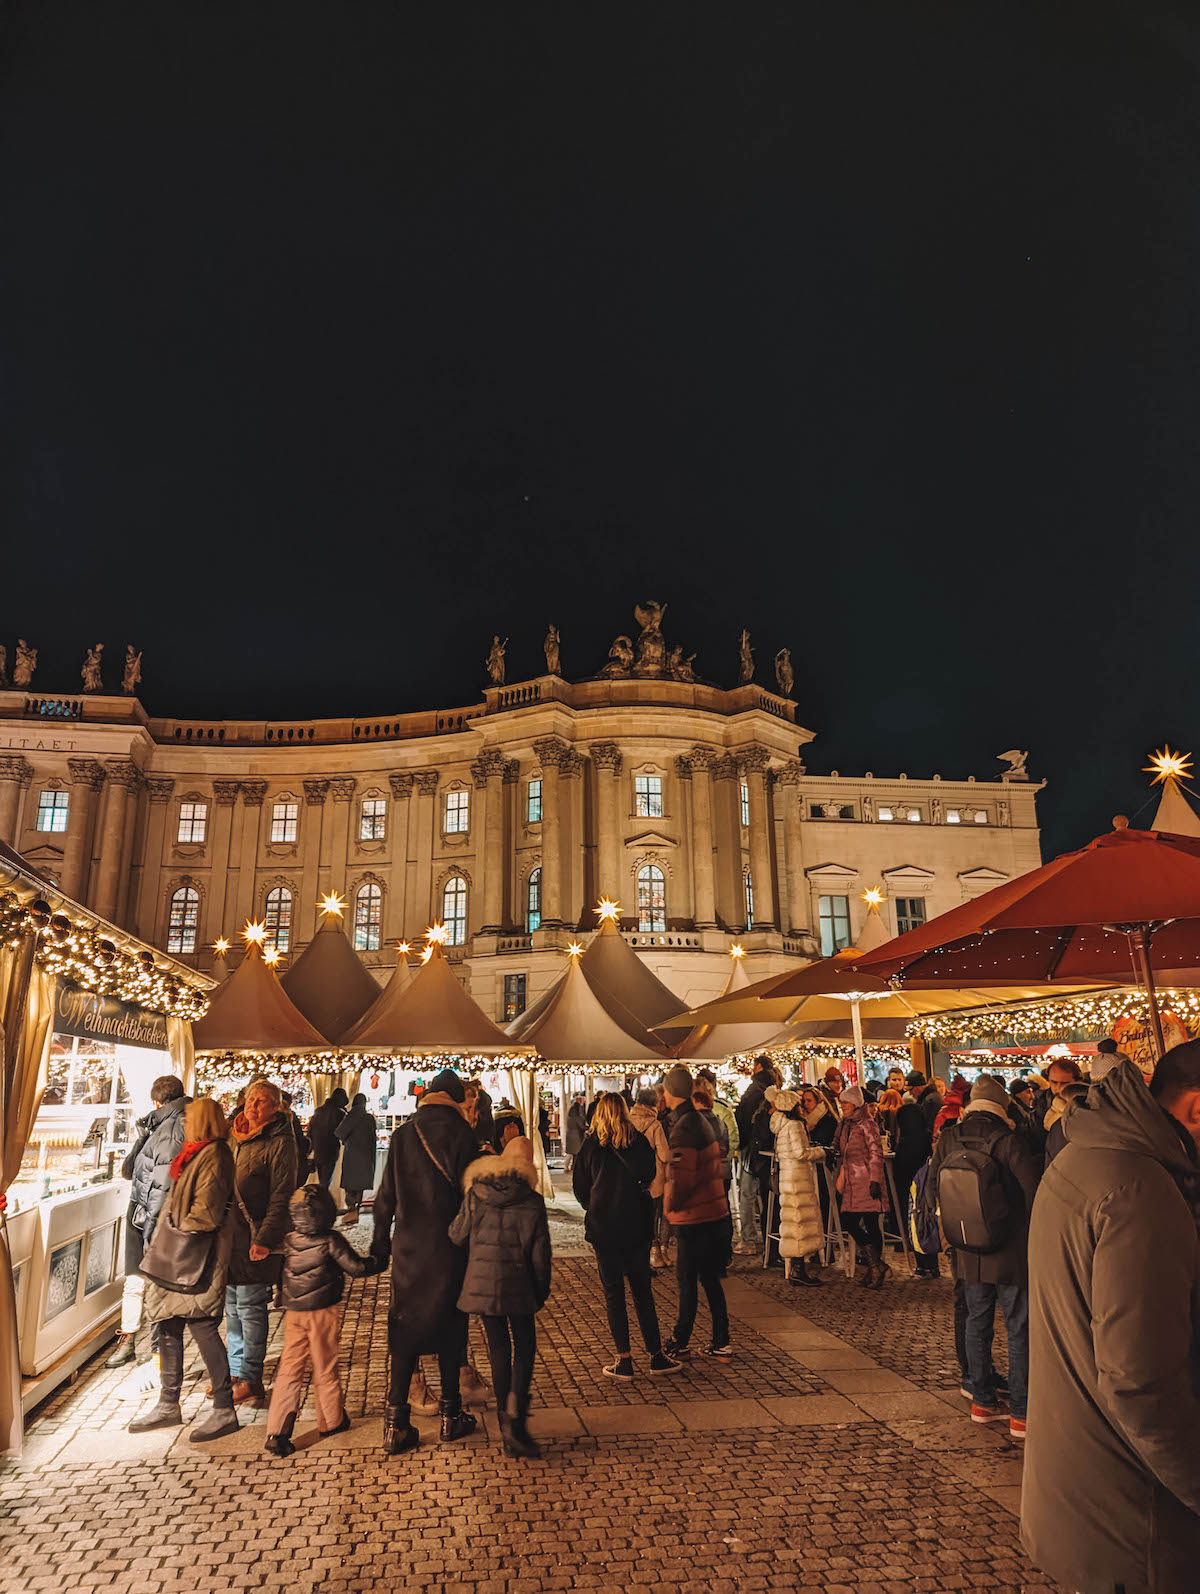 Christmas market stalls set up at Bebelplatz in Berlin, Germany